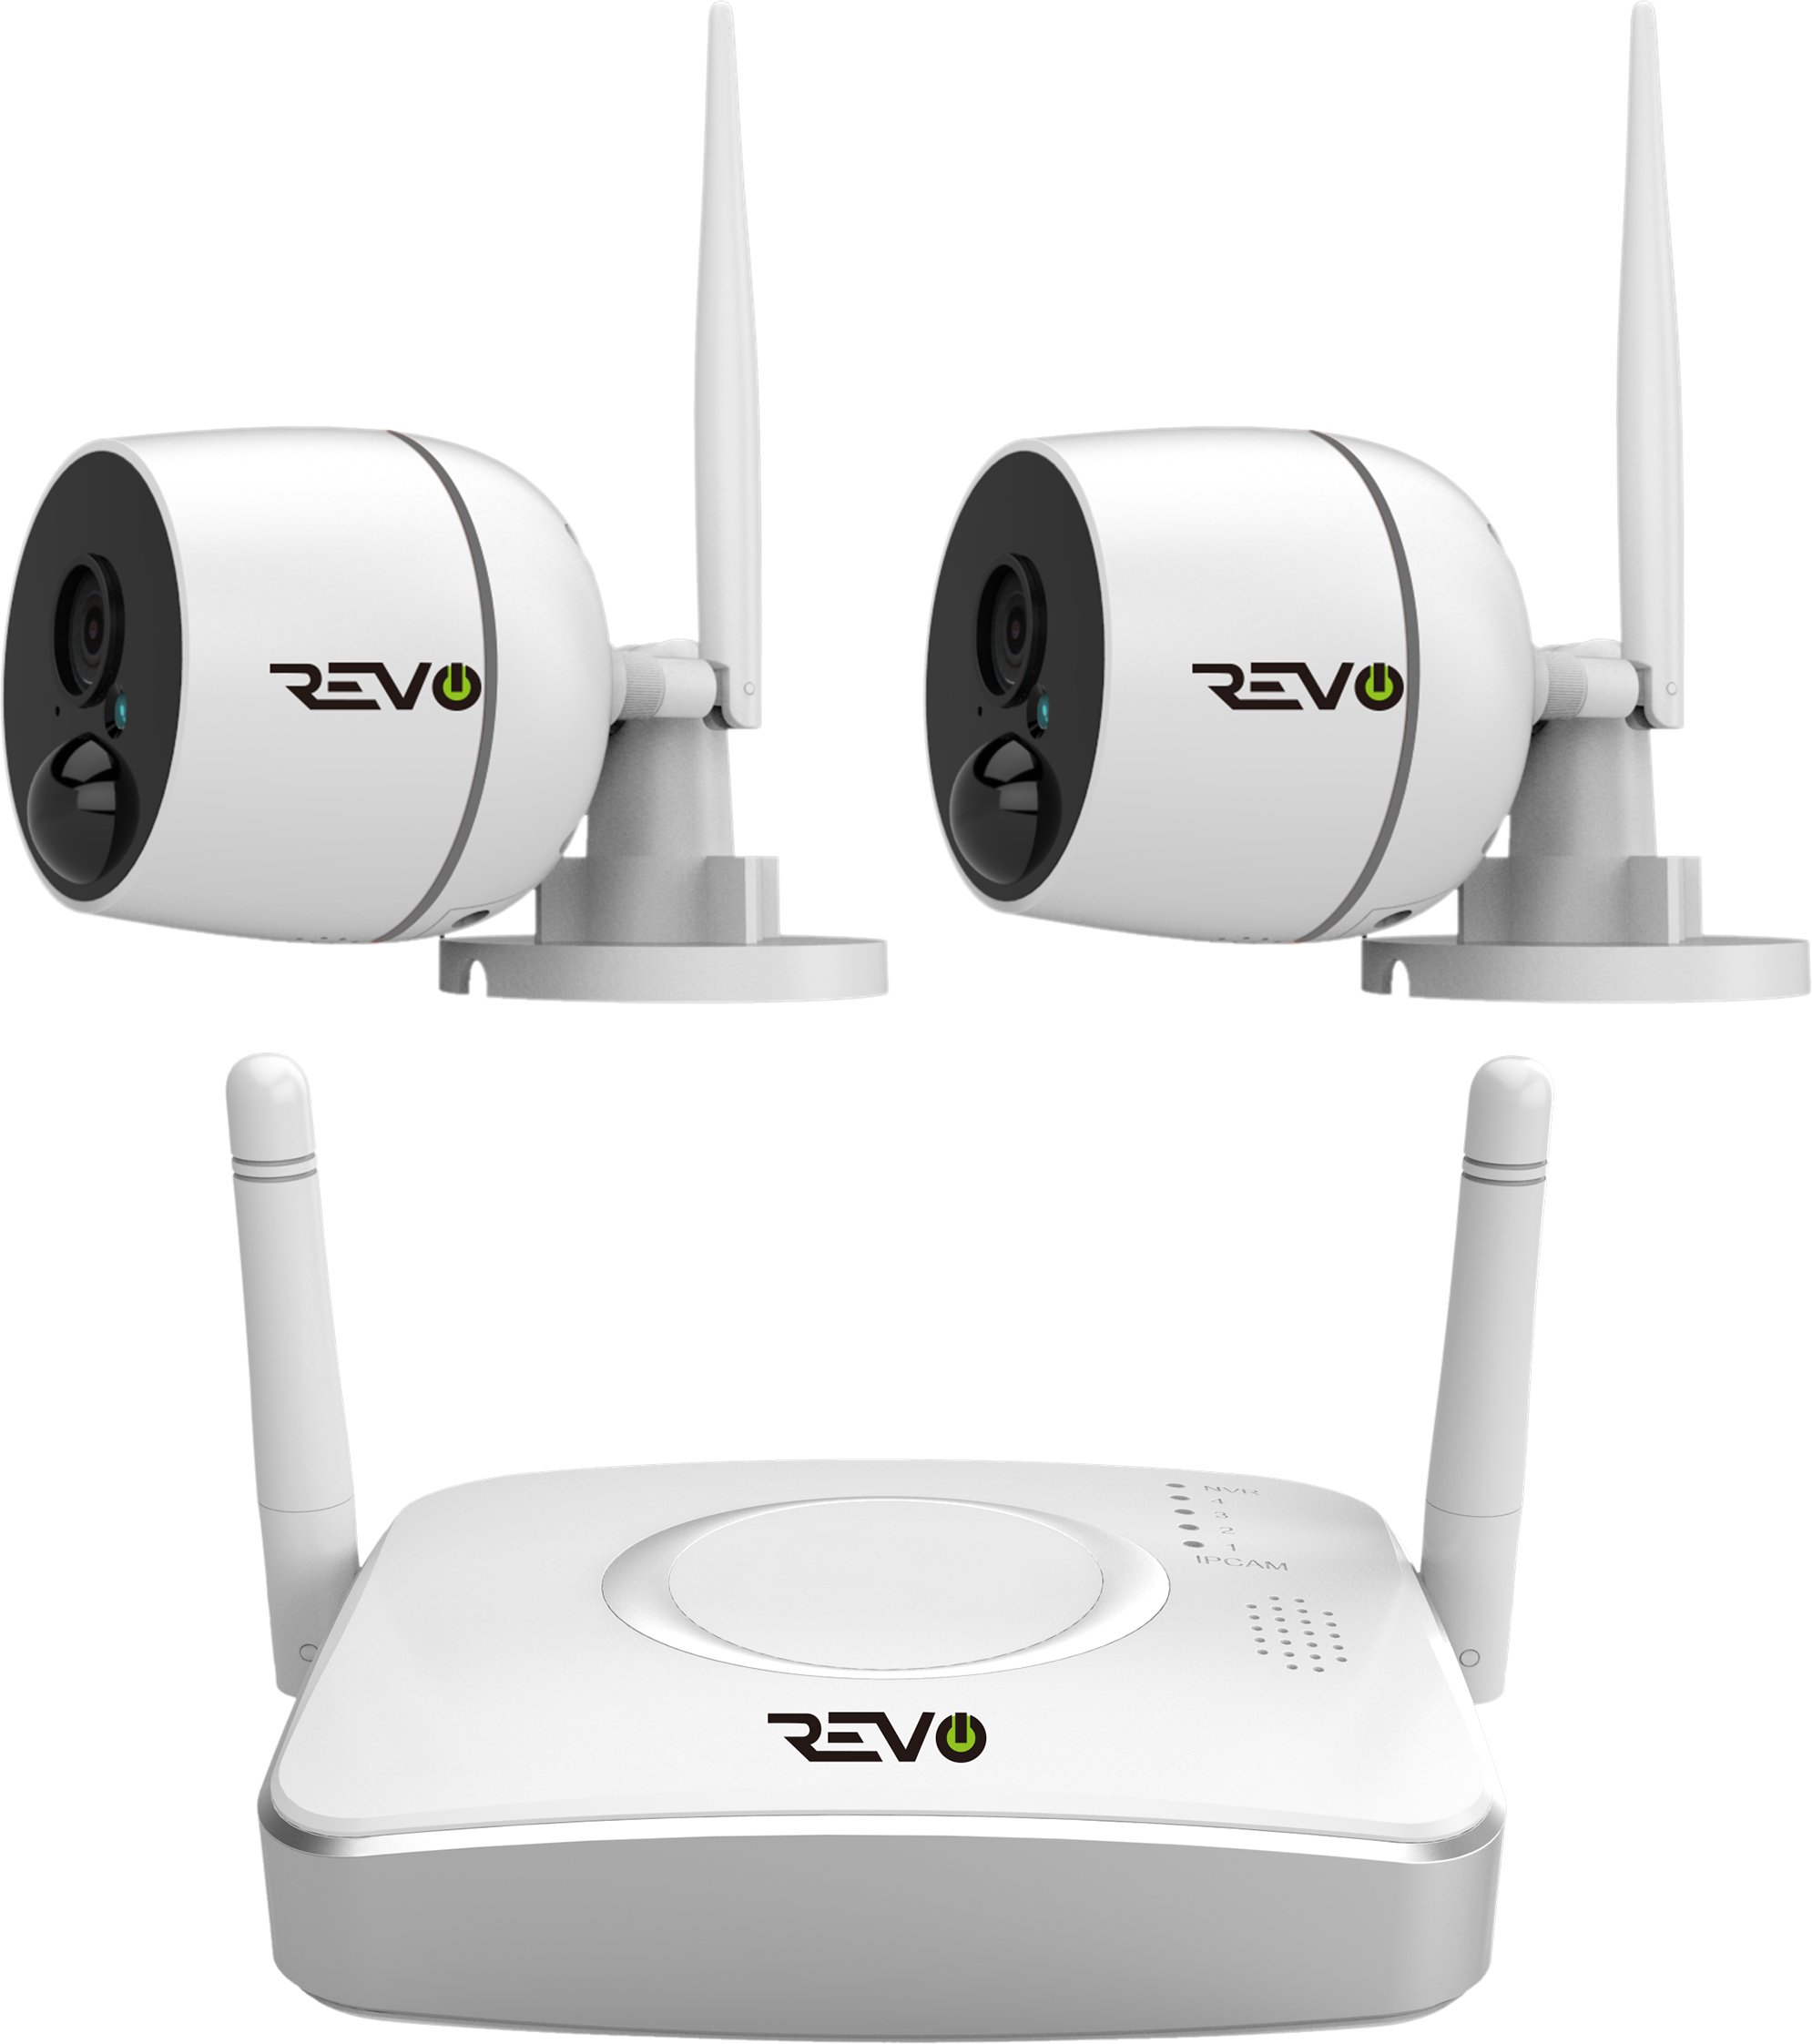 revo wireless security camera system